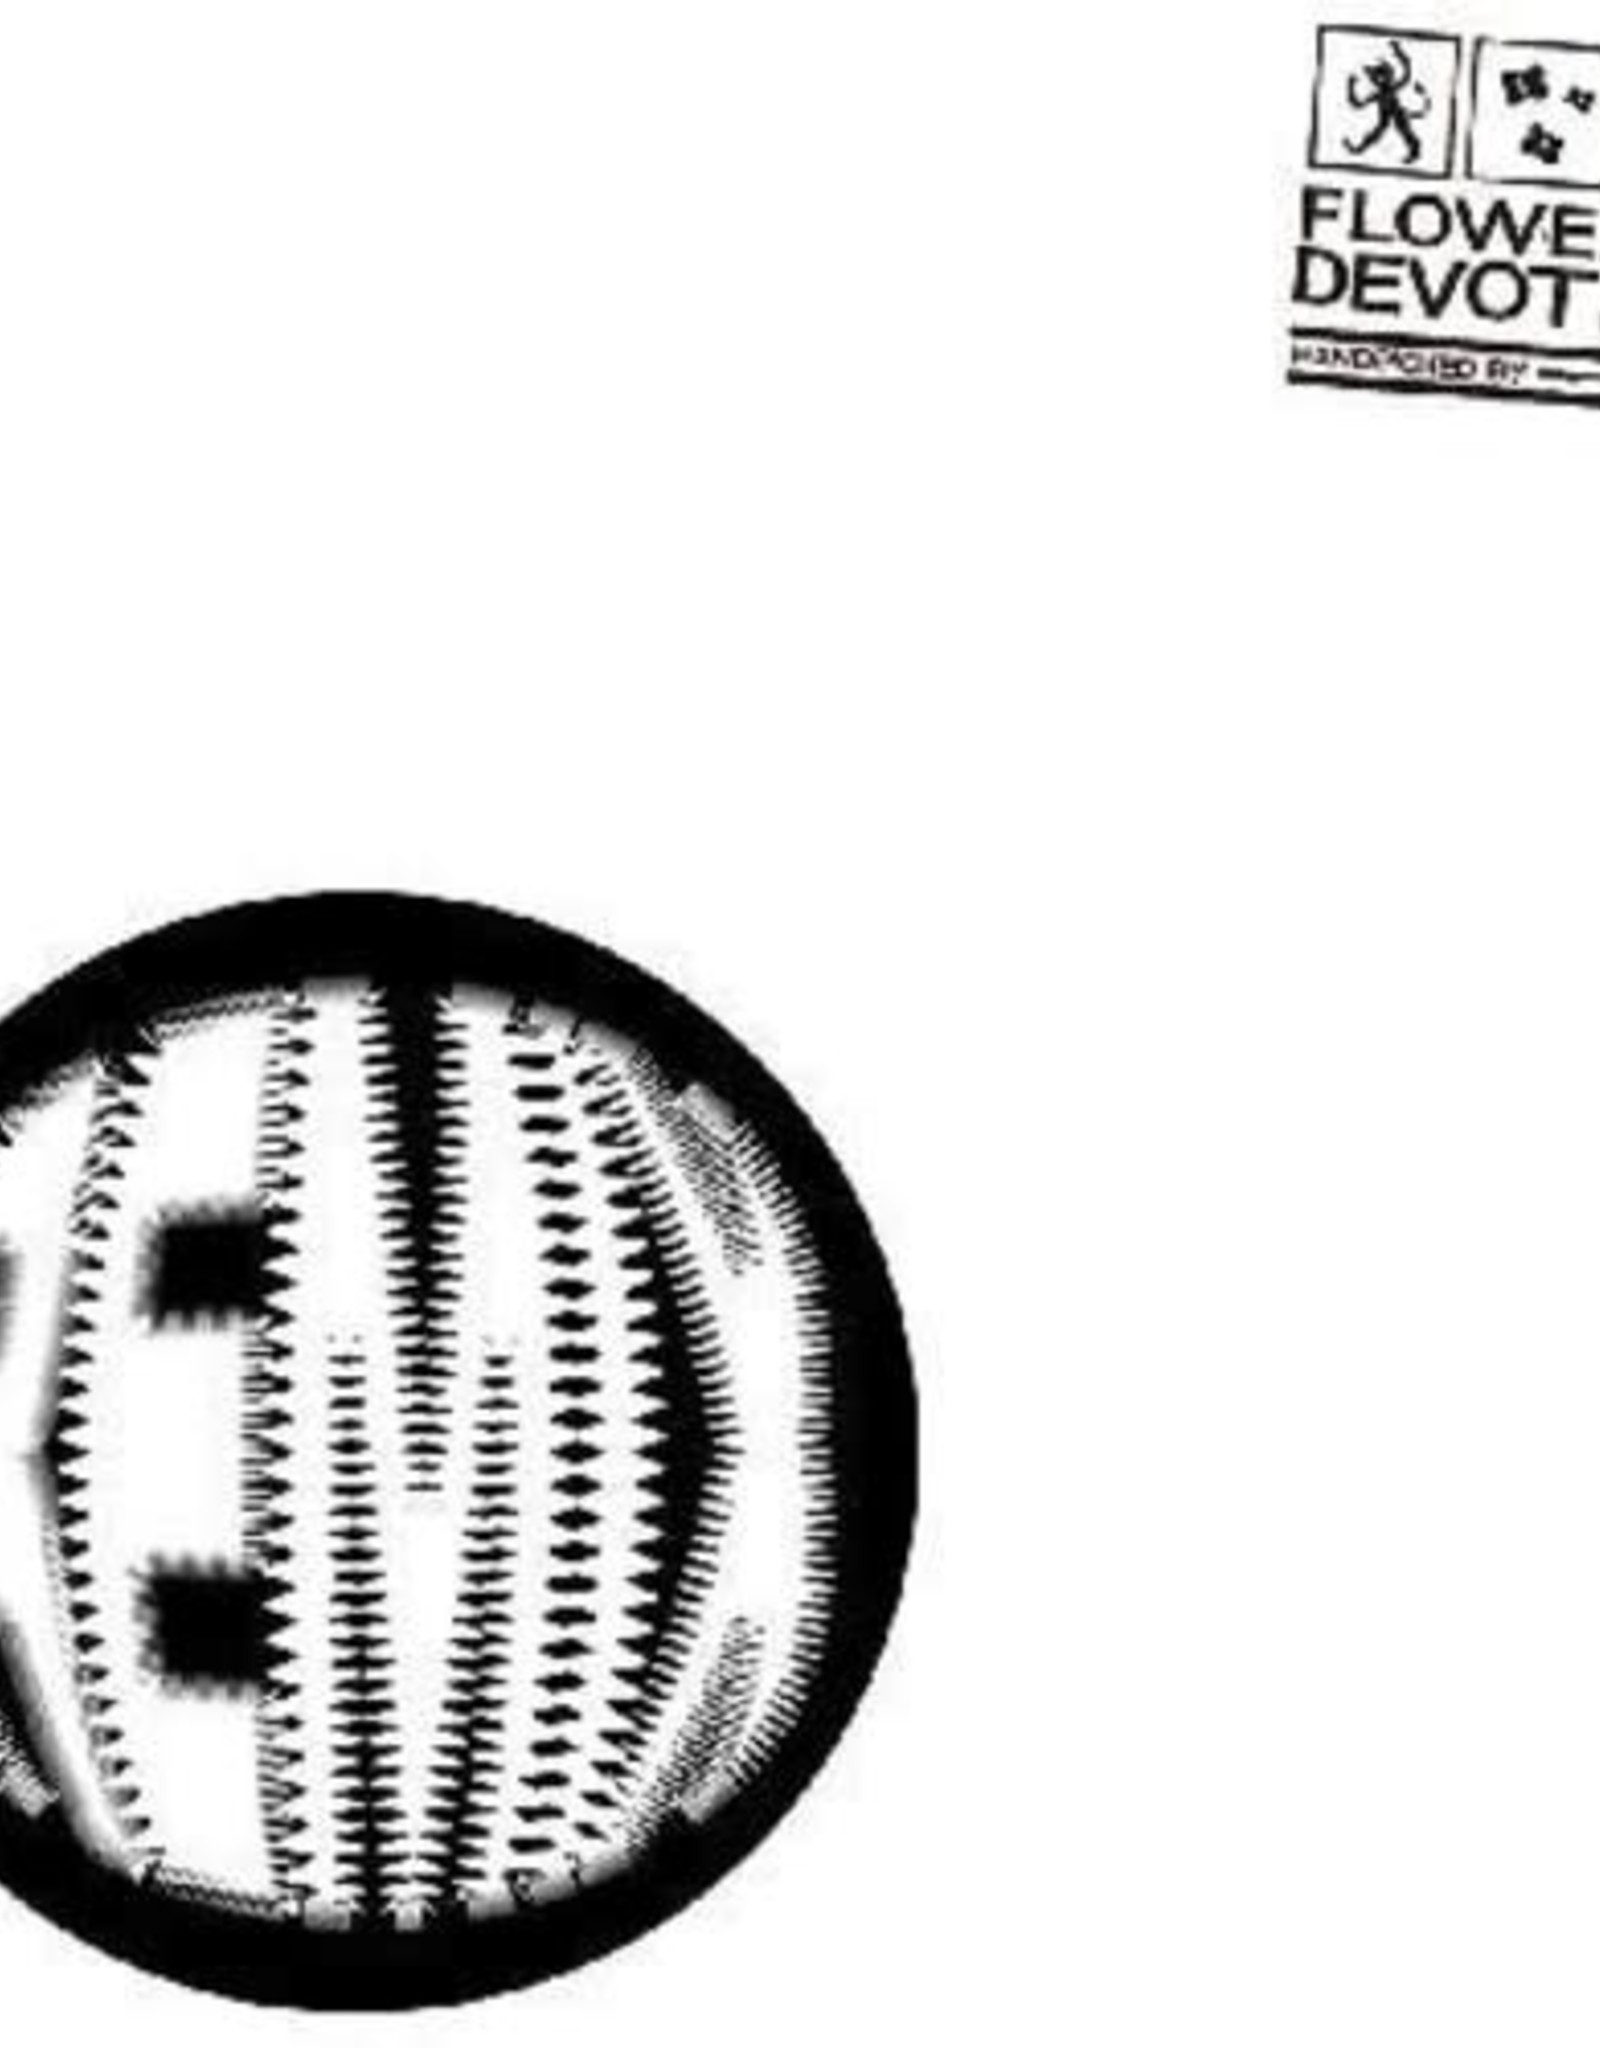 Dehd - Flower Of Devotion Remixed (Colored Vinyl, Pink)